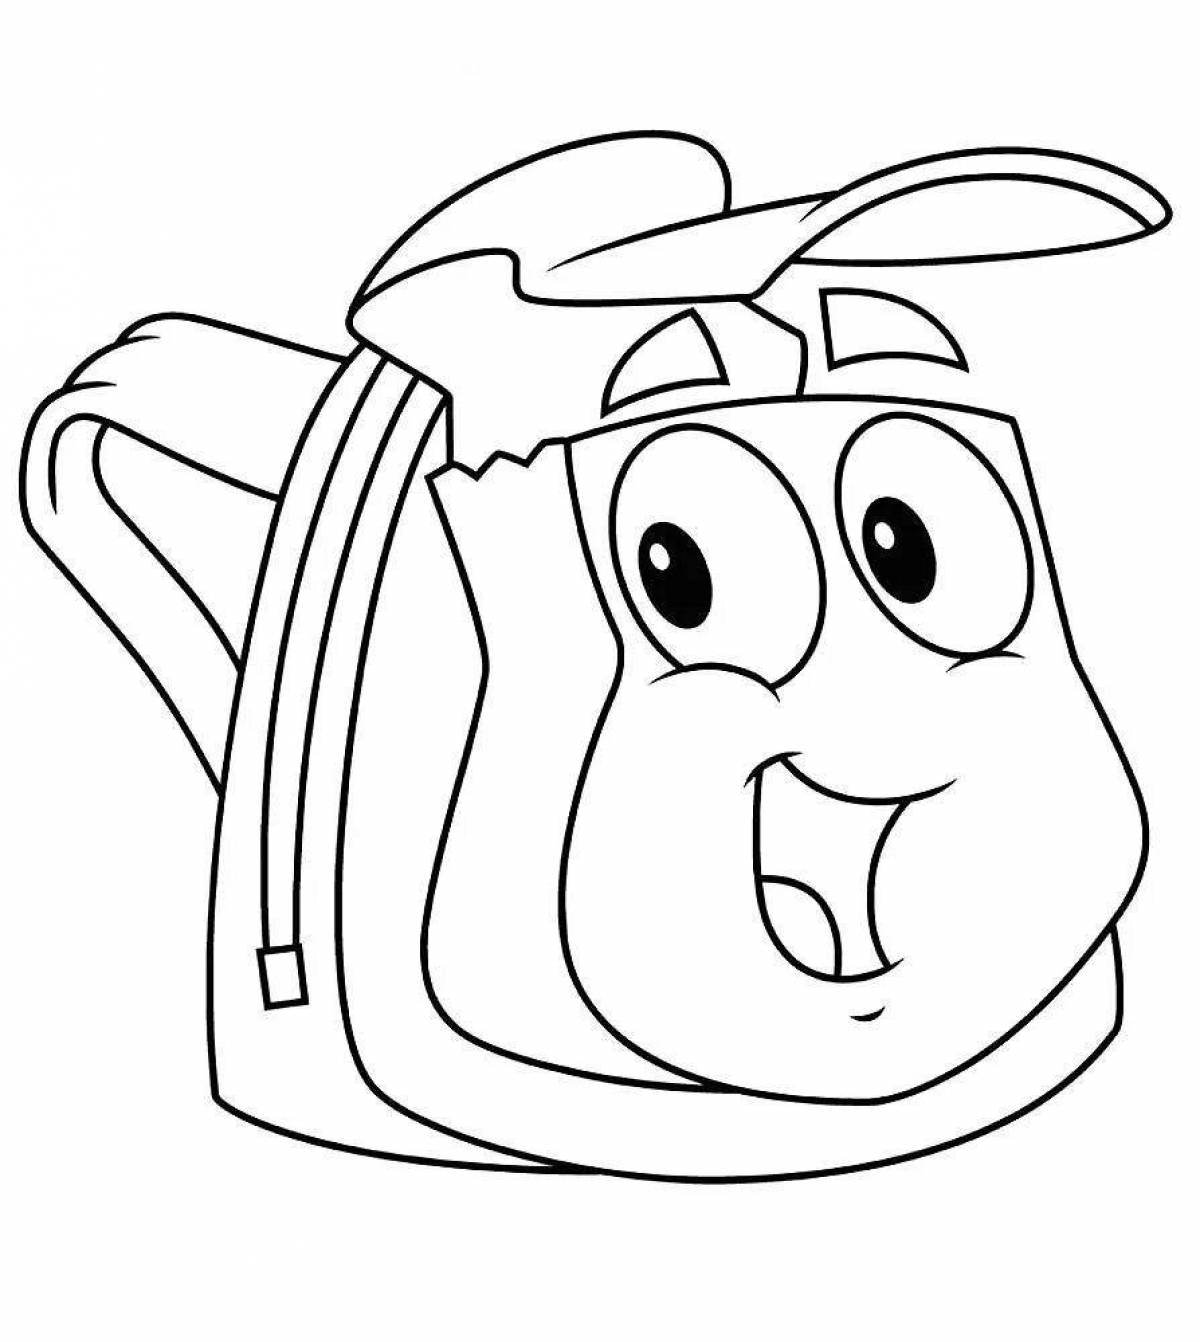 Humorous schoolbag coloring book for preschoolers